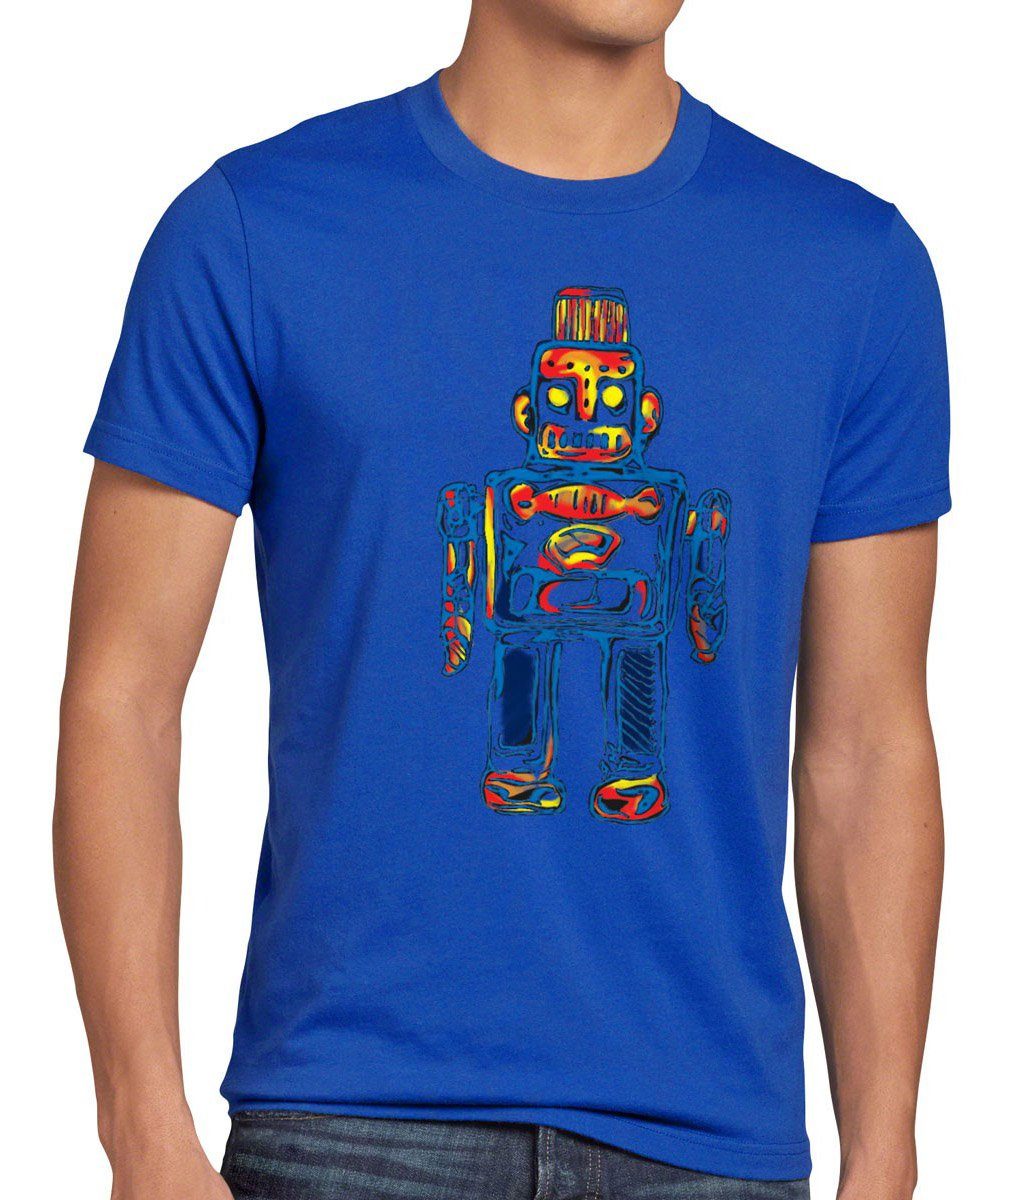 style3 Print-Shirt Herren T-Shirt Sheldon Toy Robot big bang cooper tbbt Roboter spielzeug Leonard blau